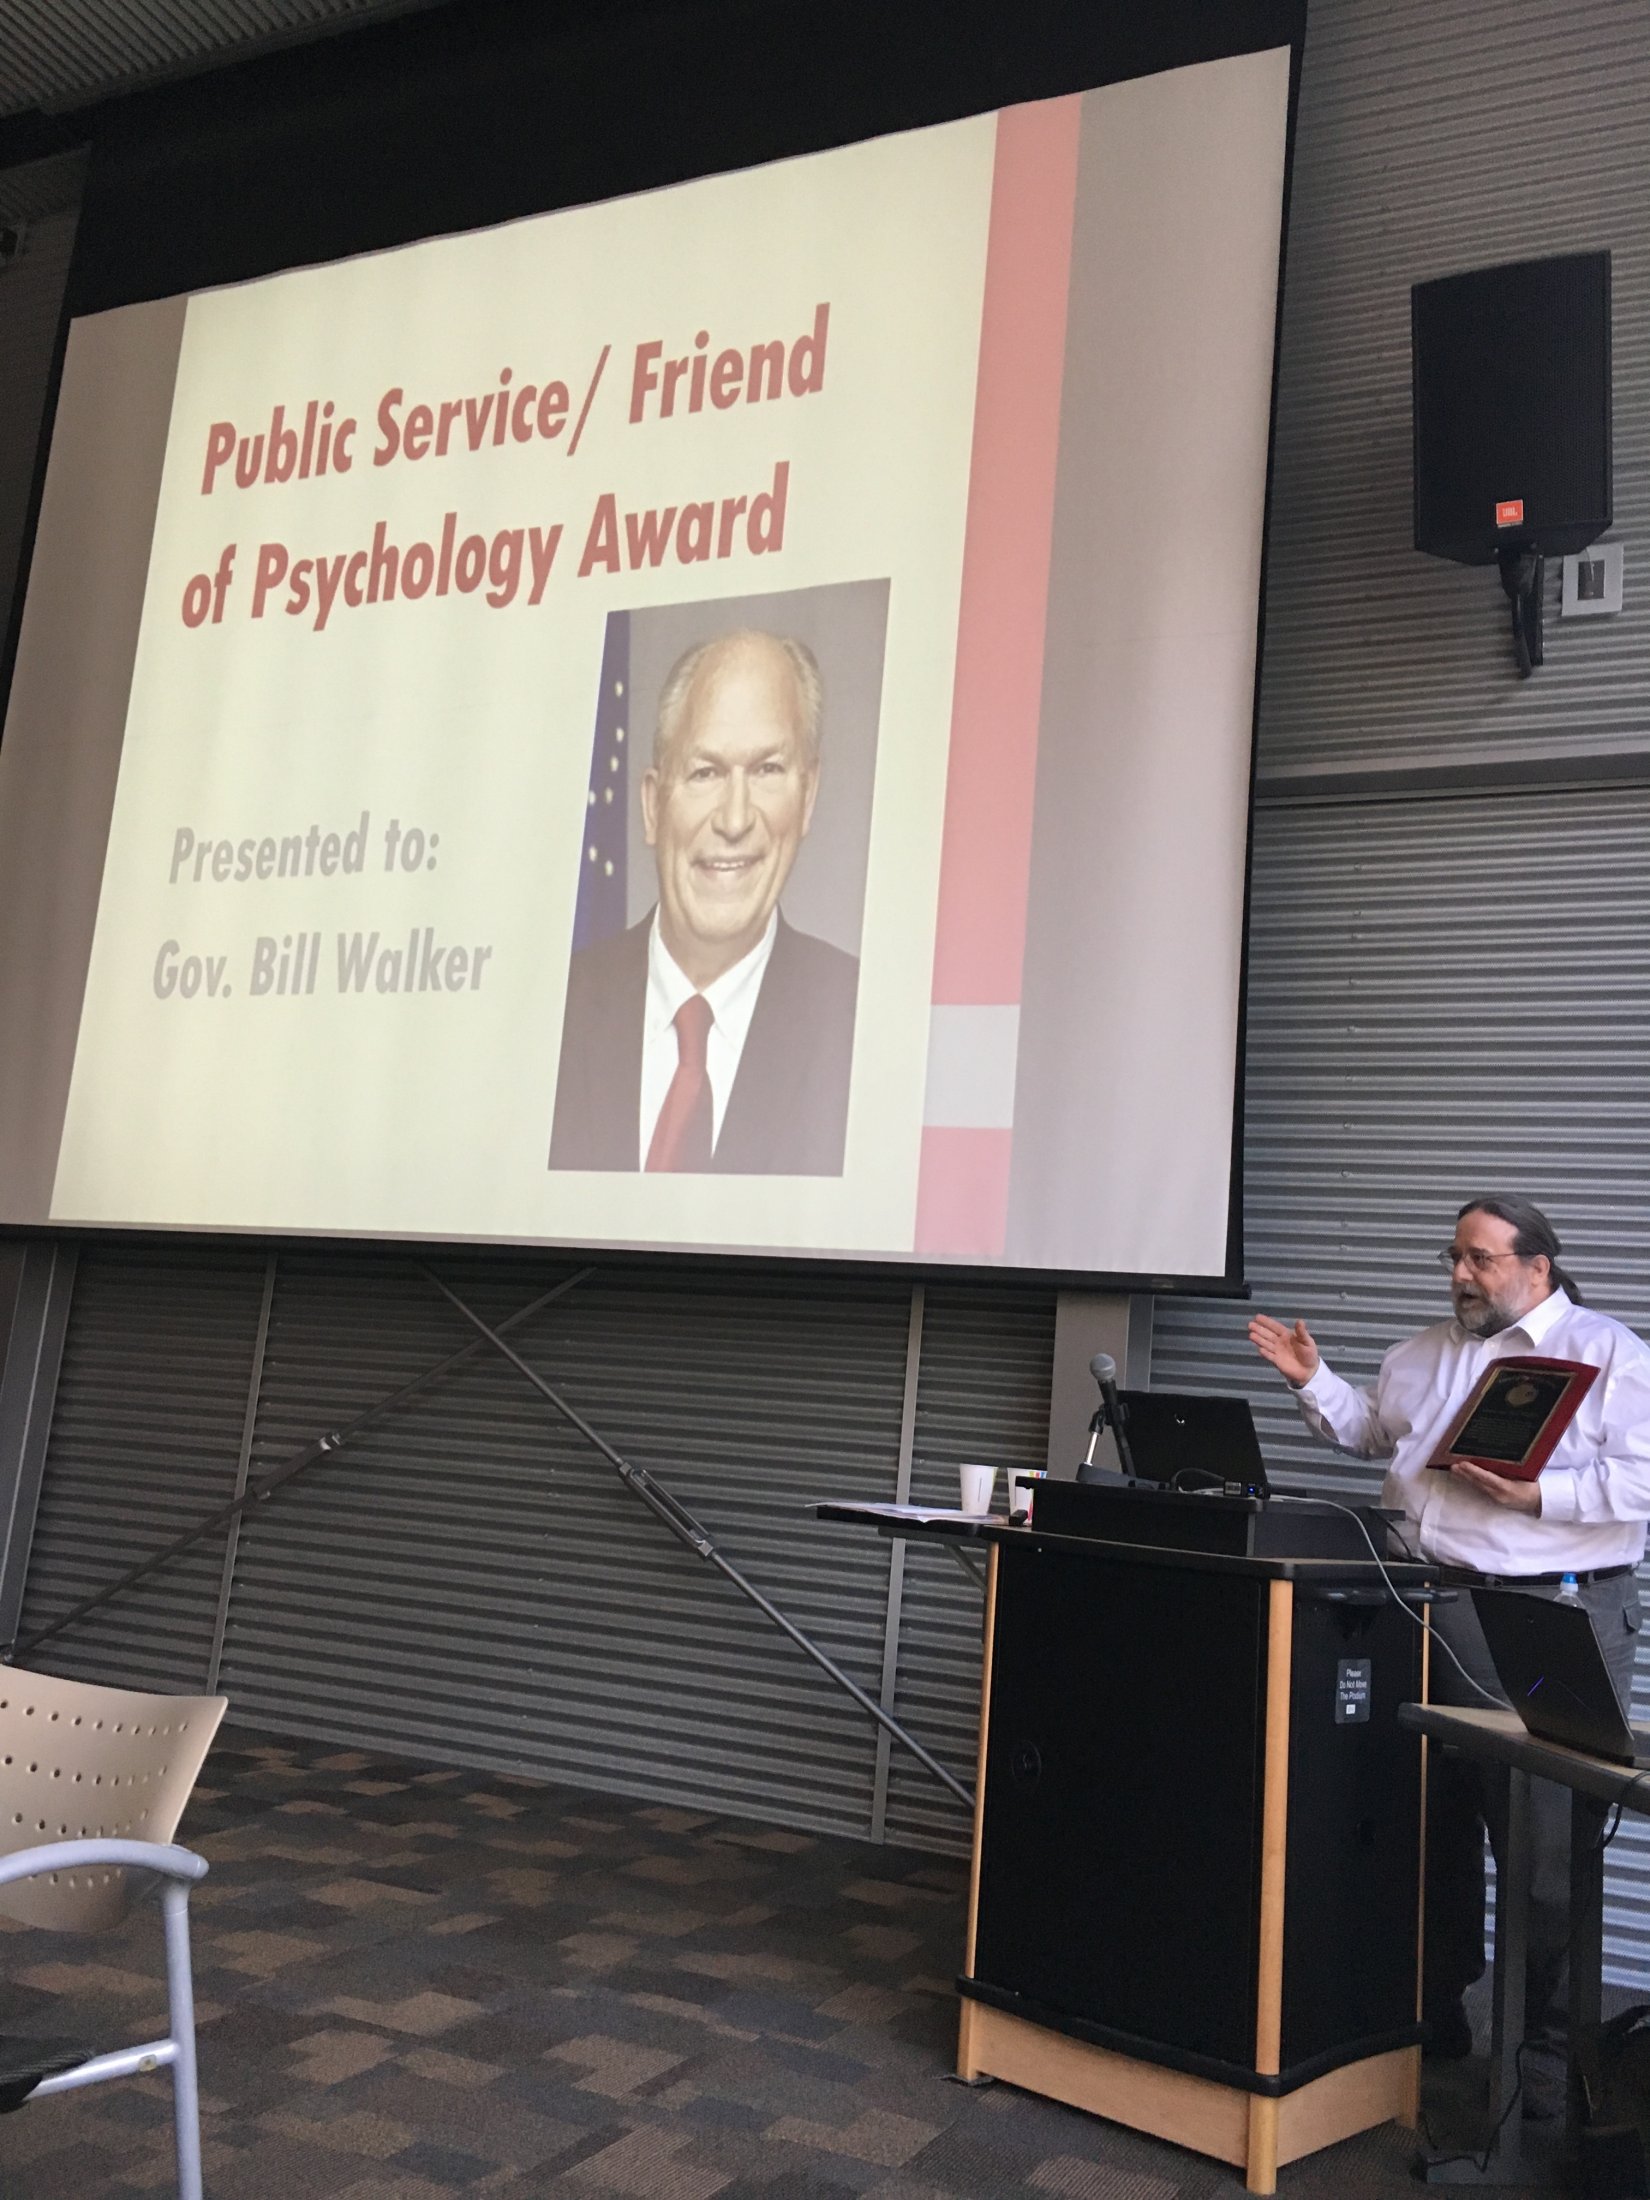 2016 Public Service/Friend of Psychology Award